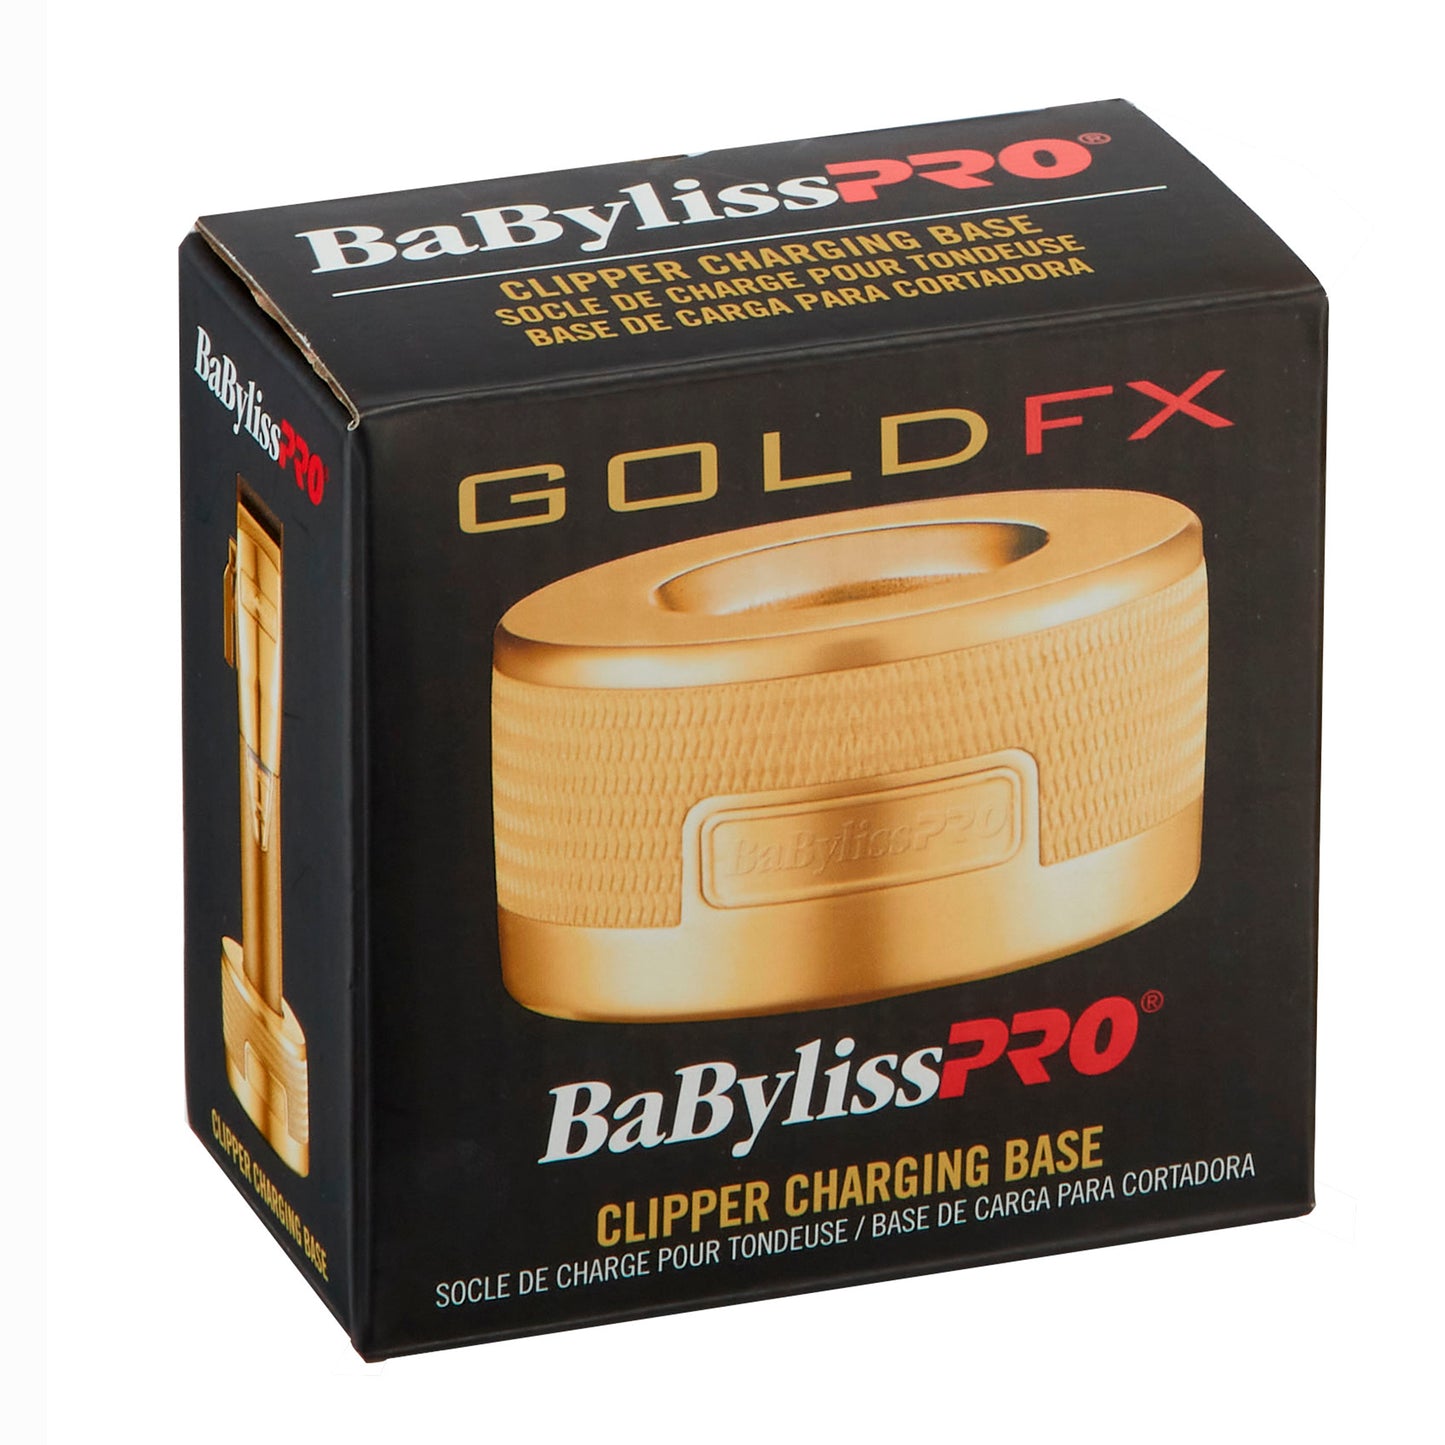 RETAIL BABYLISSPRO® GOLDFX CLIPPER CHARGING BASE